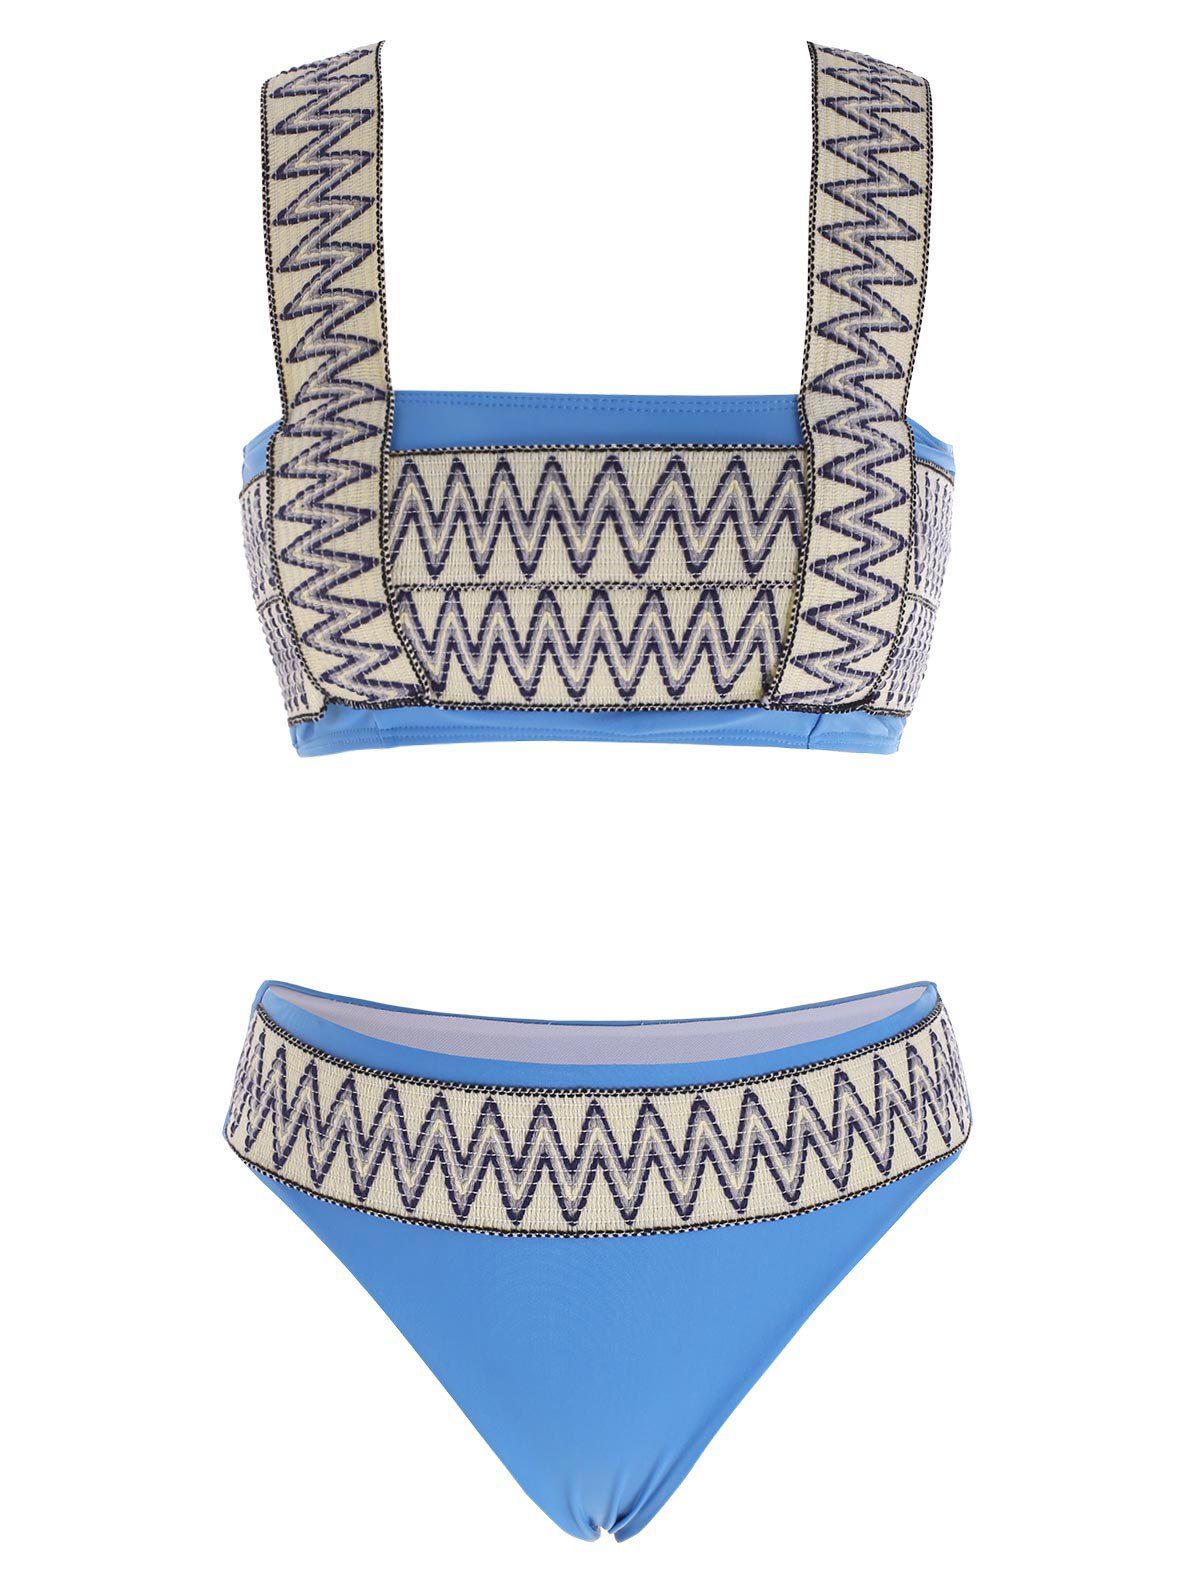 Zig Zag Embroidered Tape Square Neck Bikini Swimwear - LIGHT BLUE M